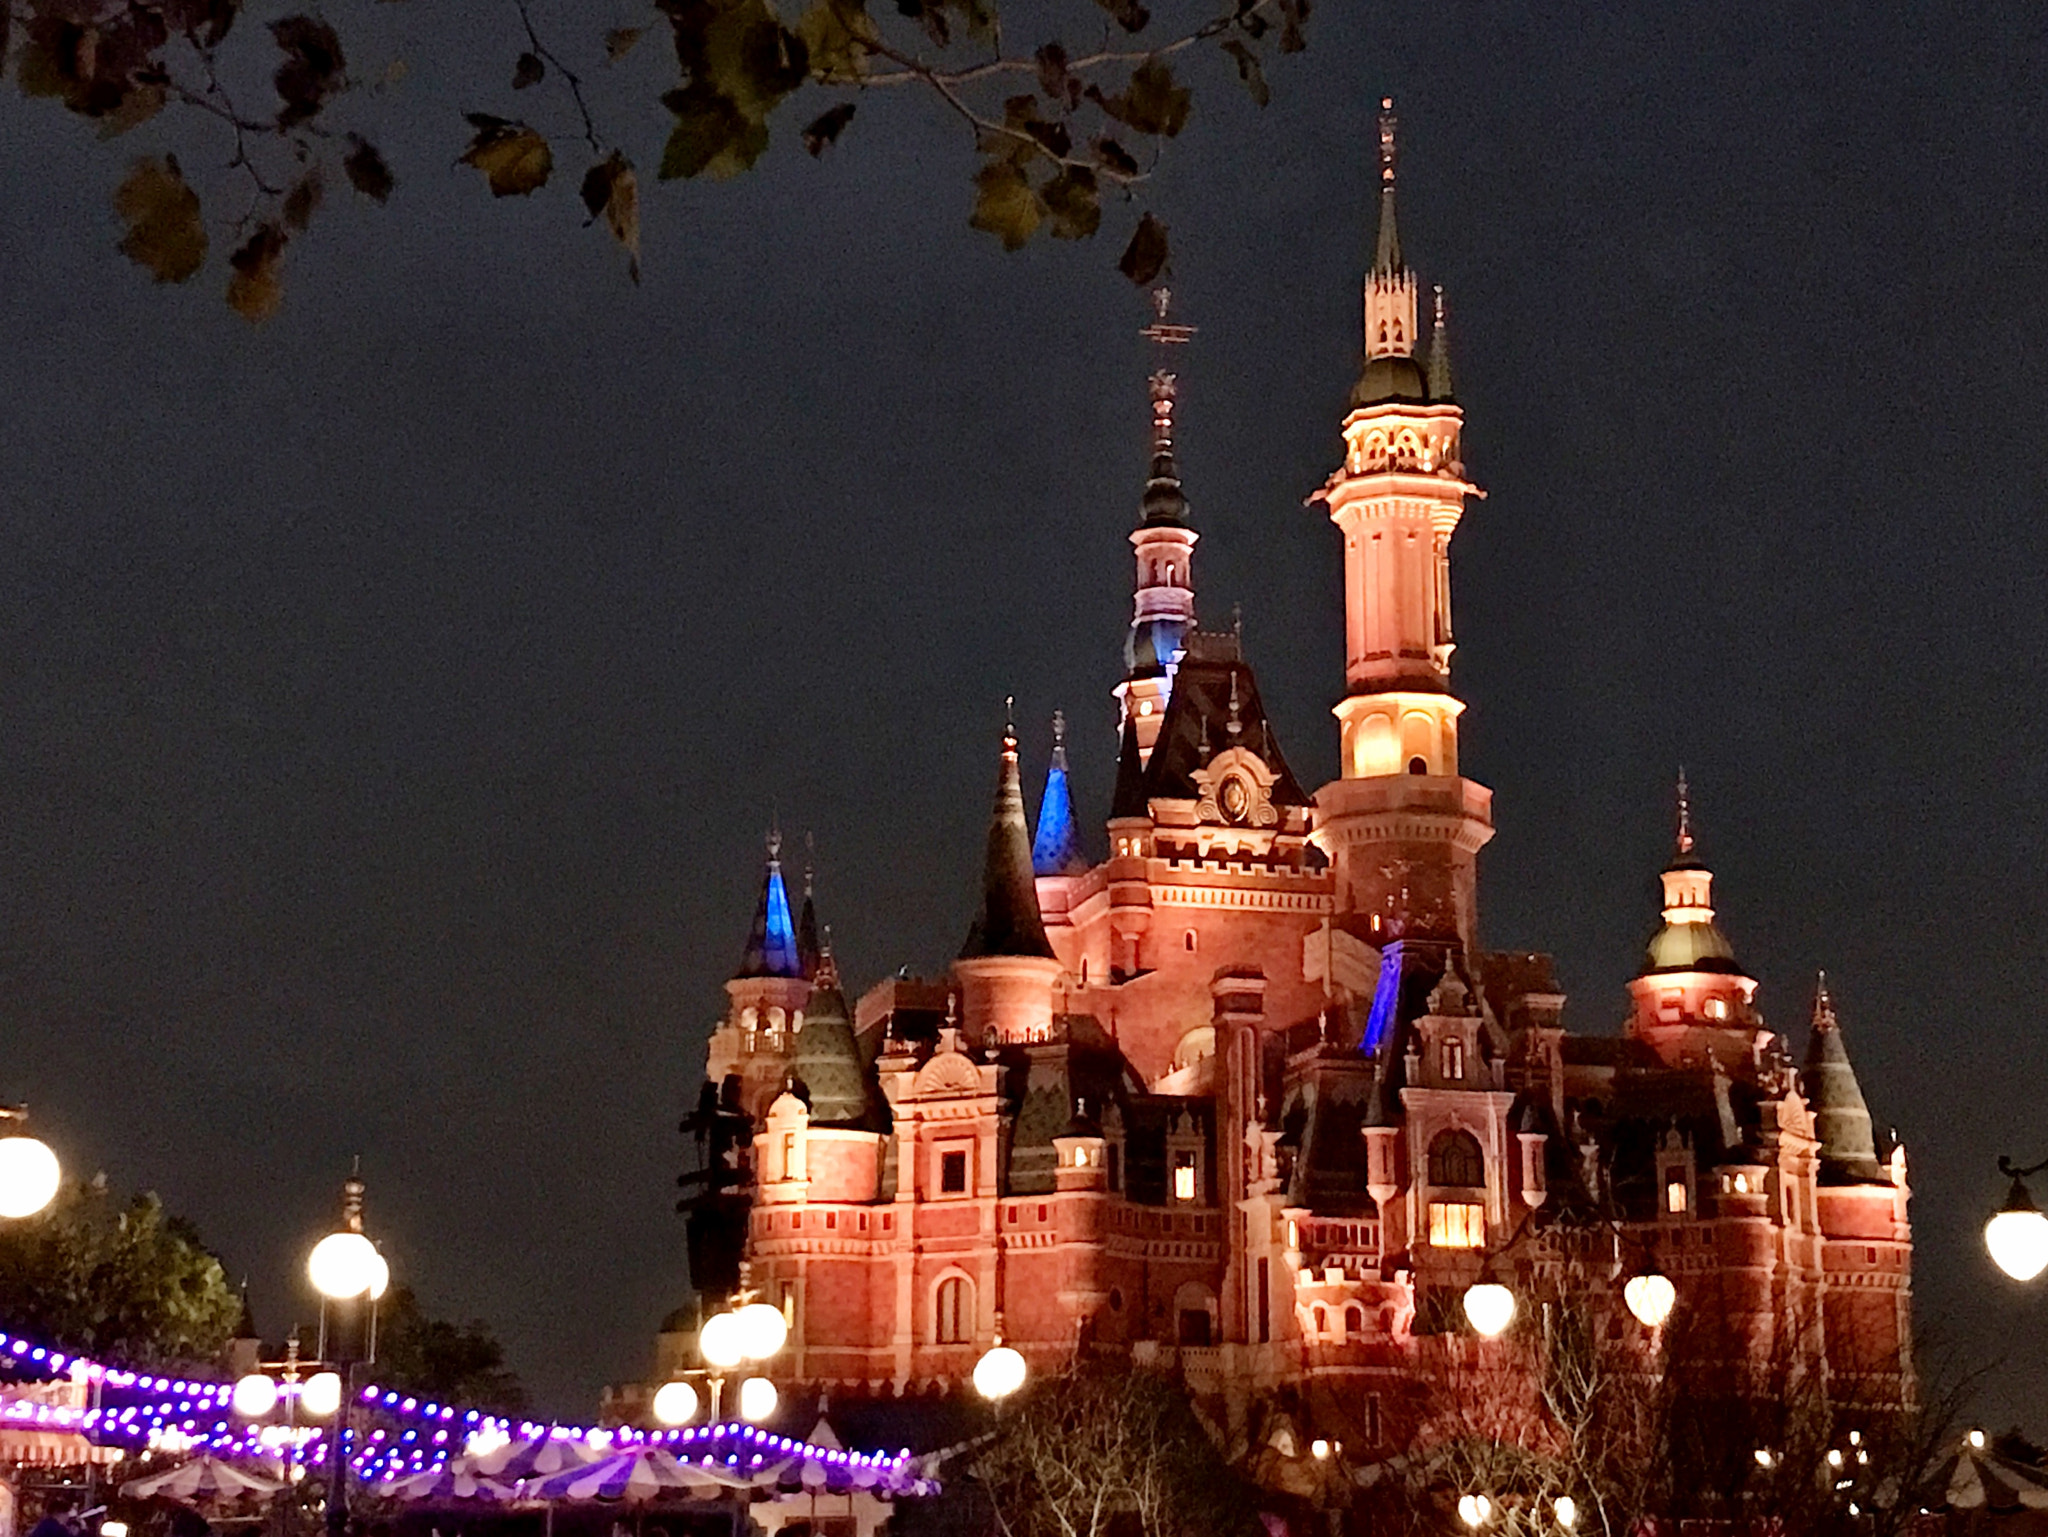 Apple iPhone9,1 sample photo. Disney castle at night 迪士尼城堡夜景 photography